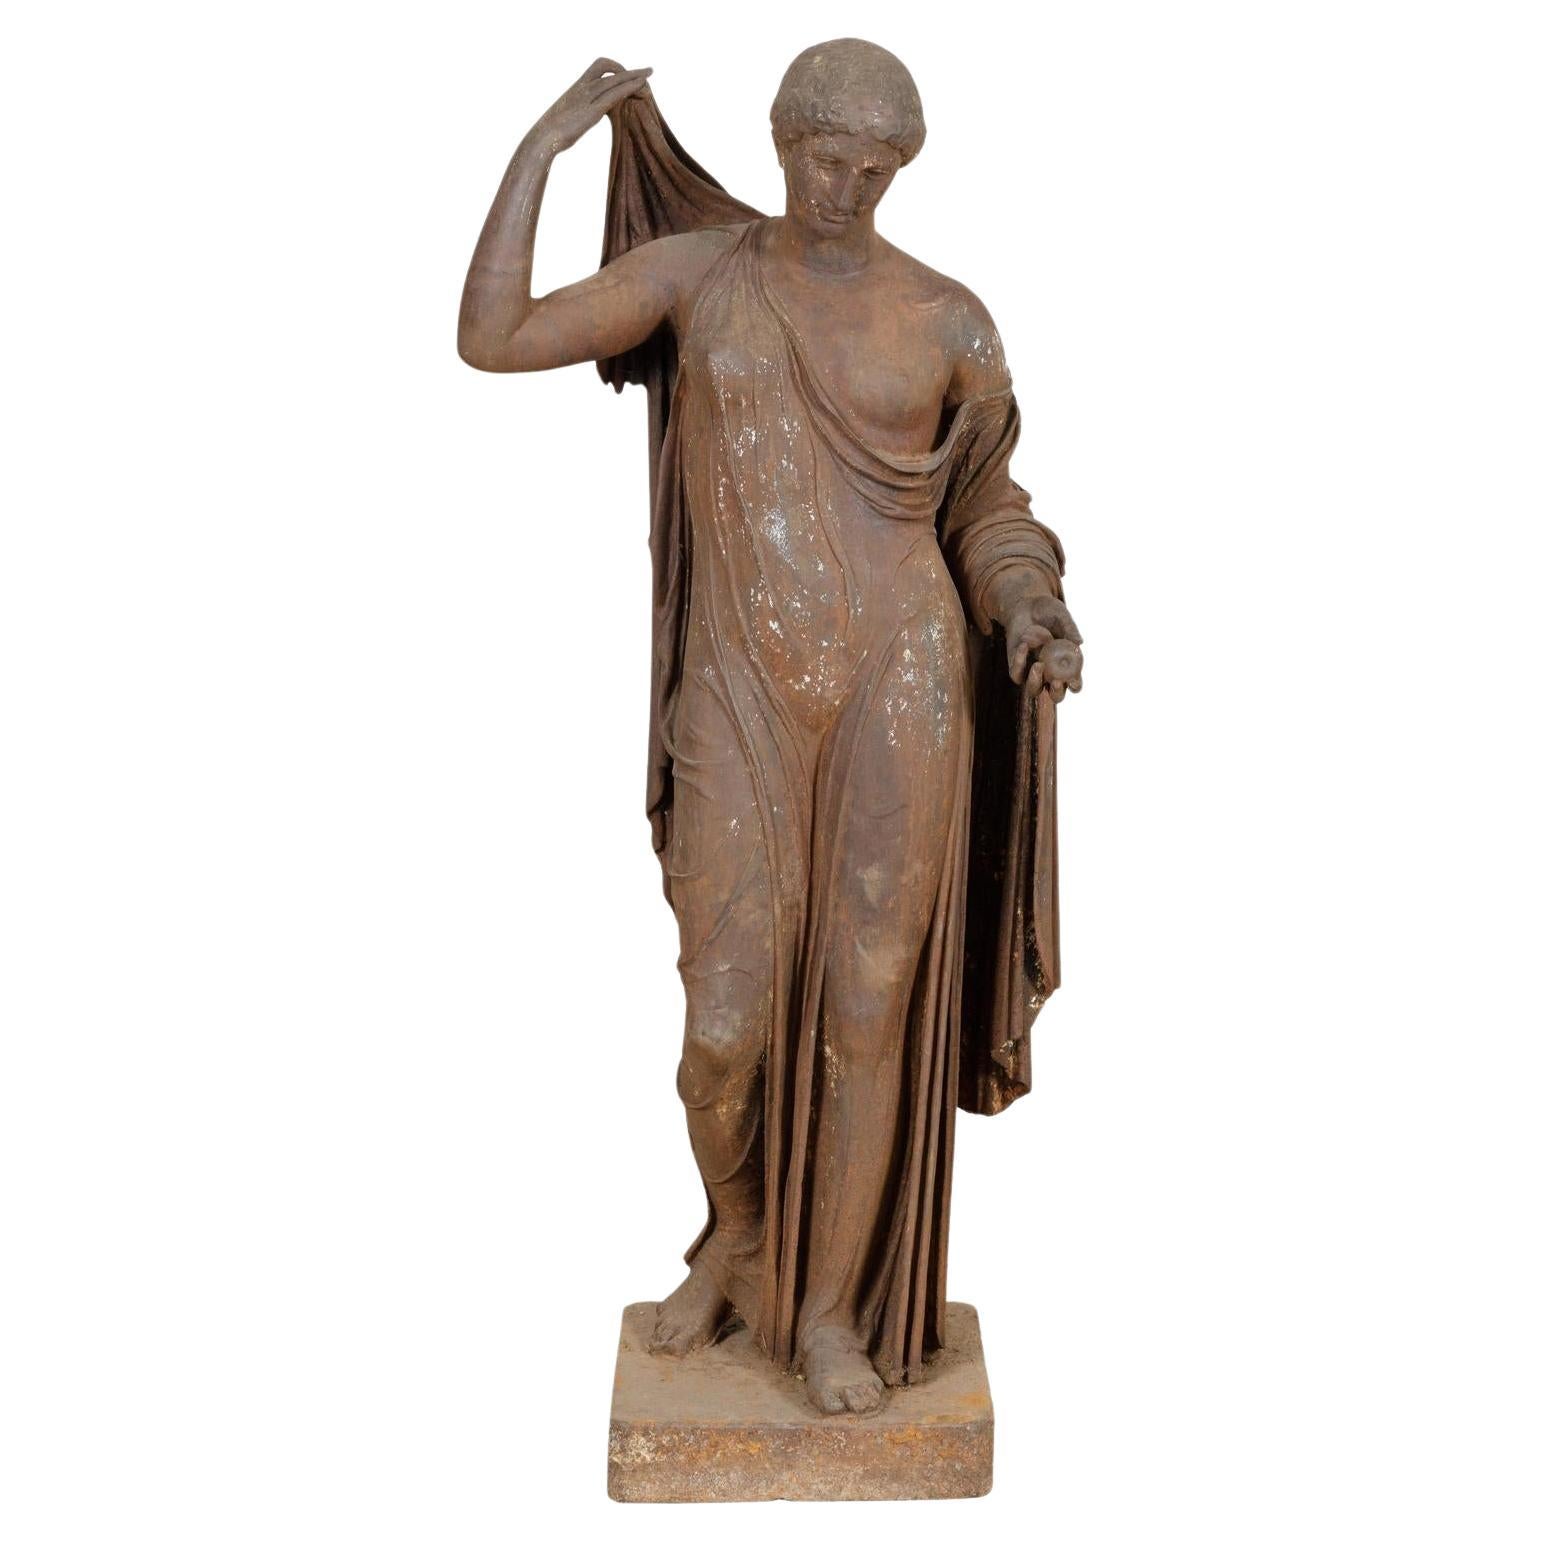 European Life Size Cast Iron Garden Statue of the Goddess Aphrodite